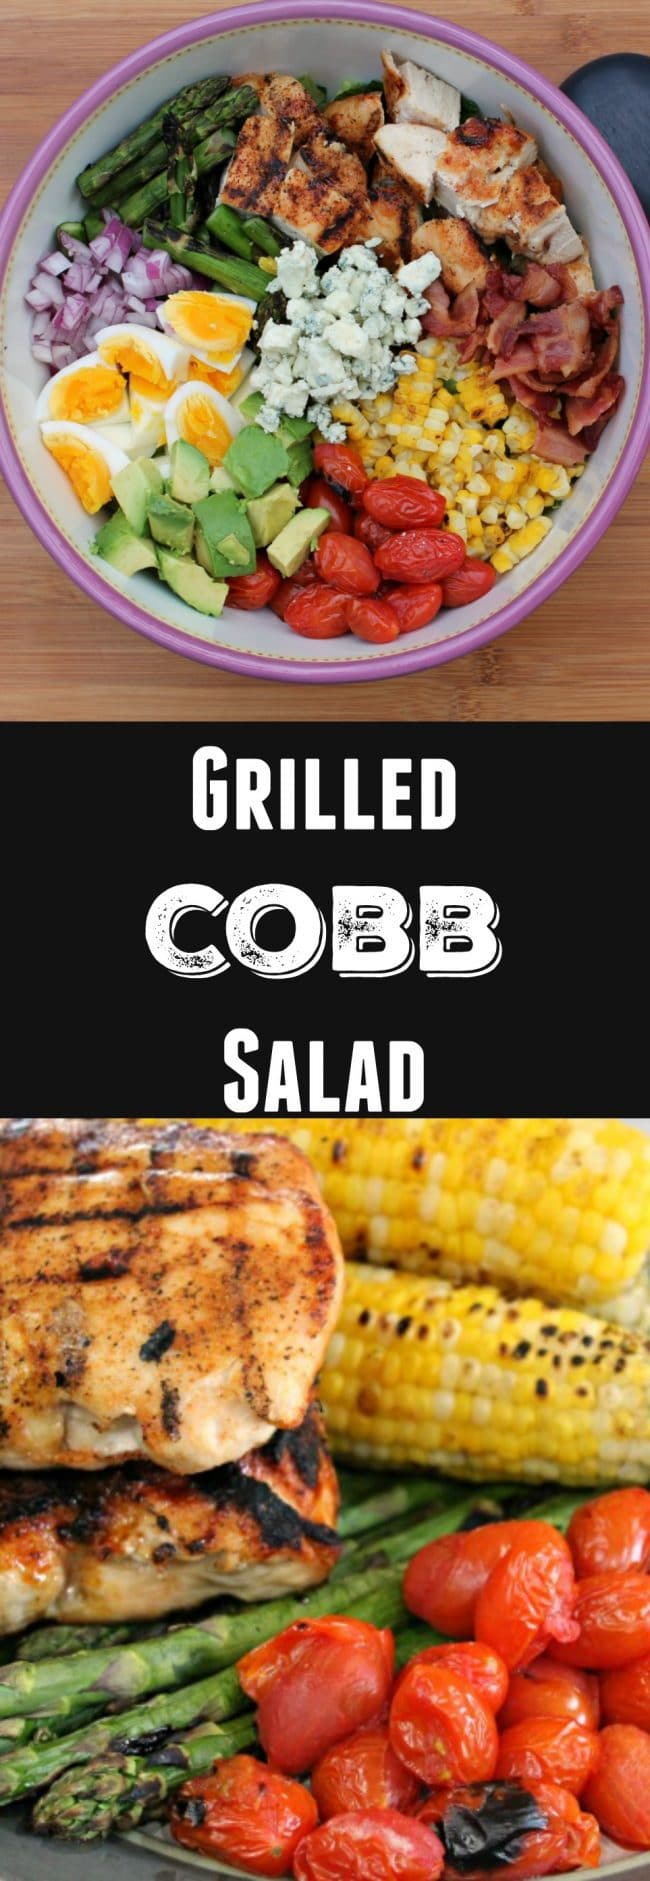 Grilled Cobb Salad foodyschmoodyblog.com